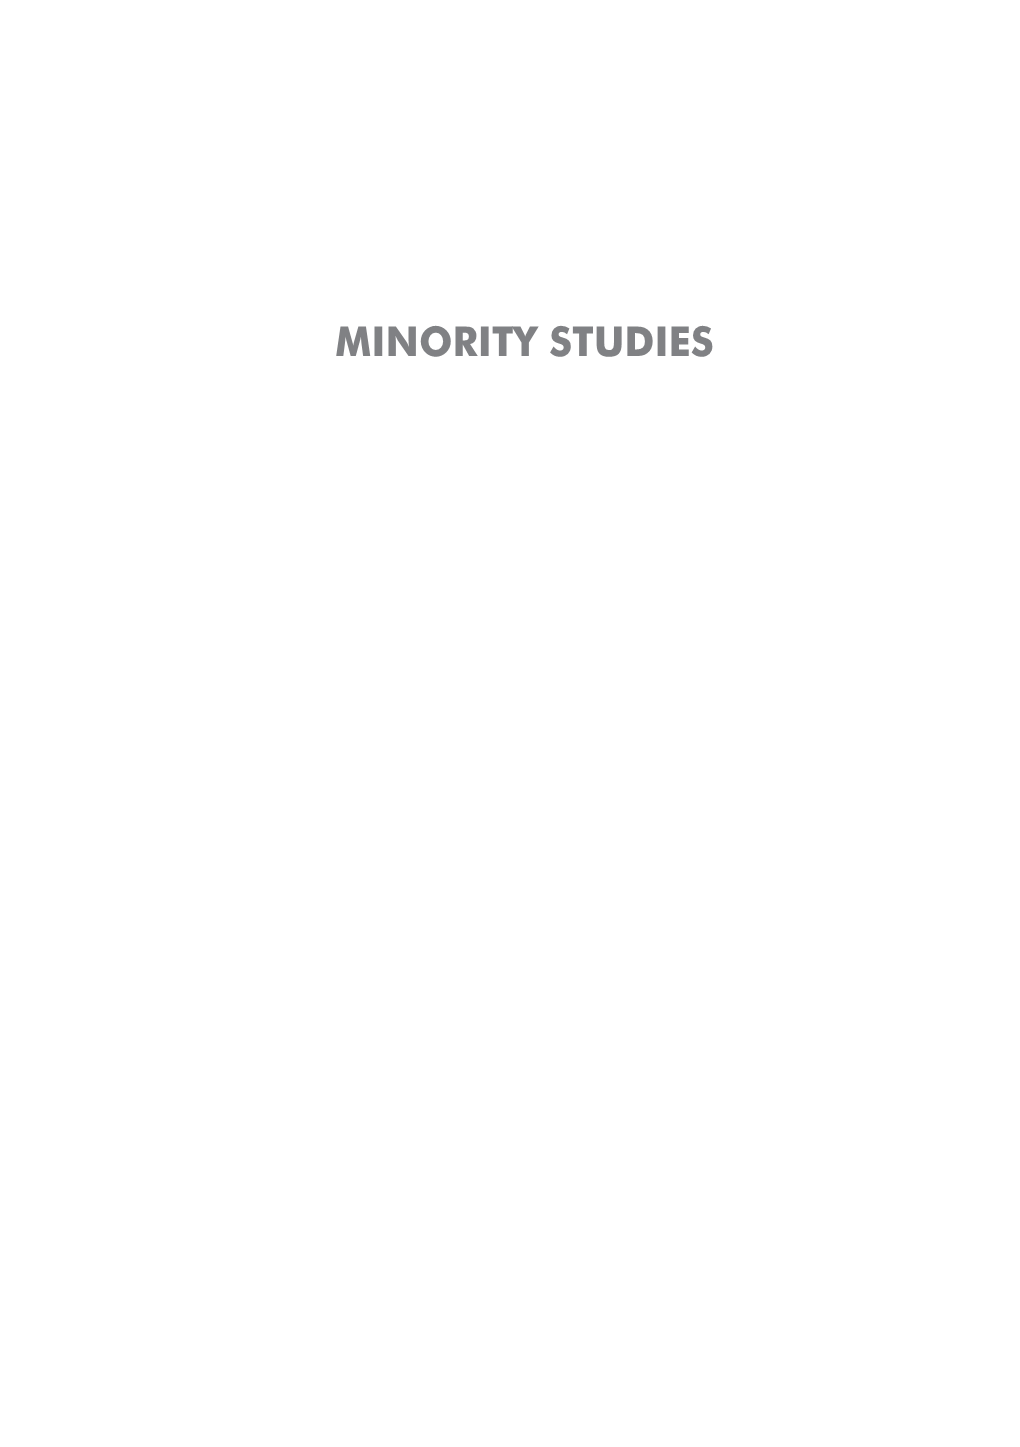 Minority Studies